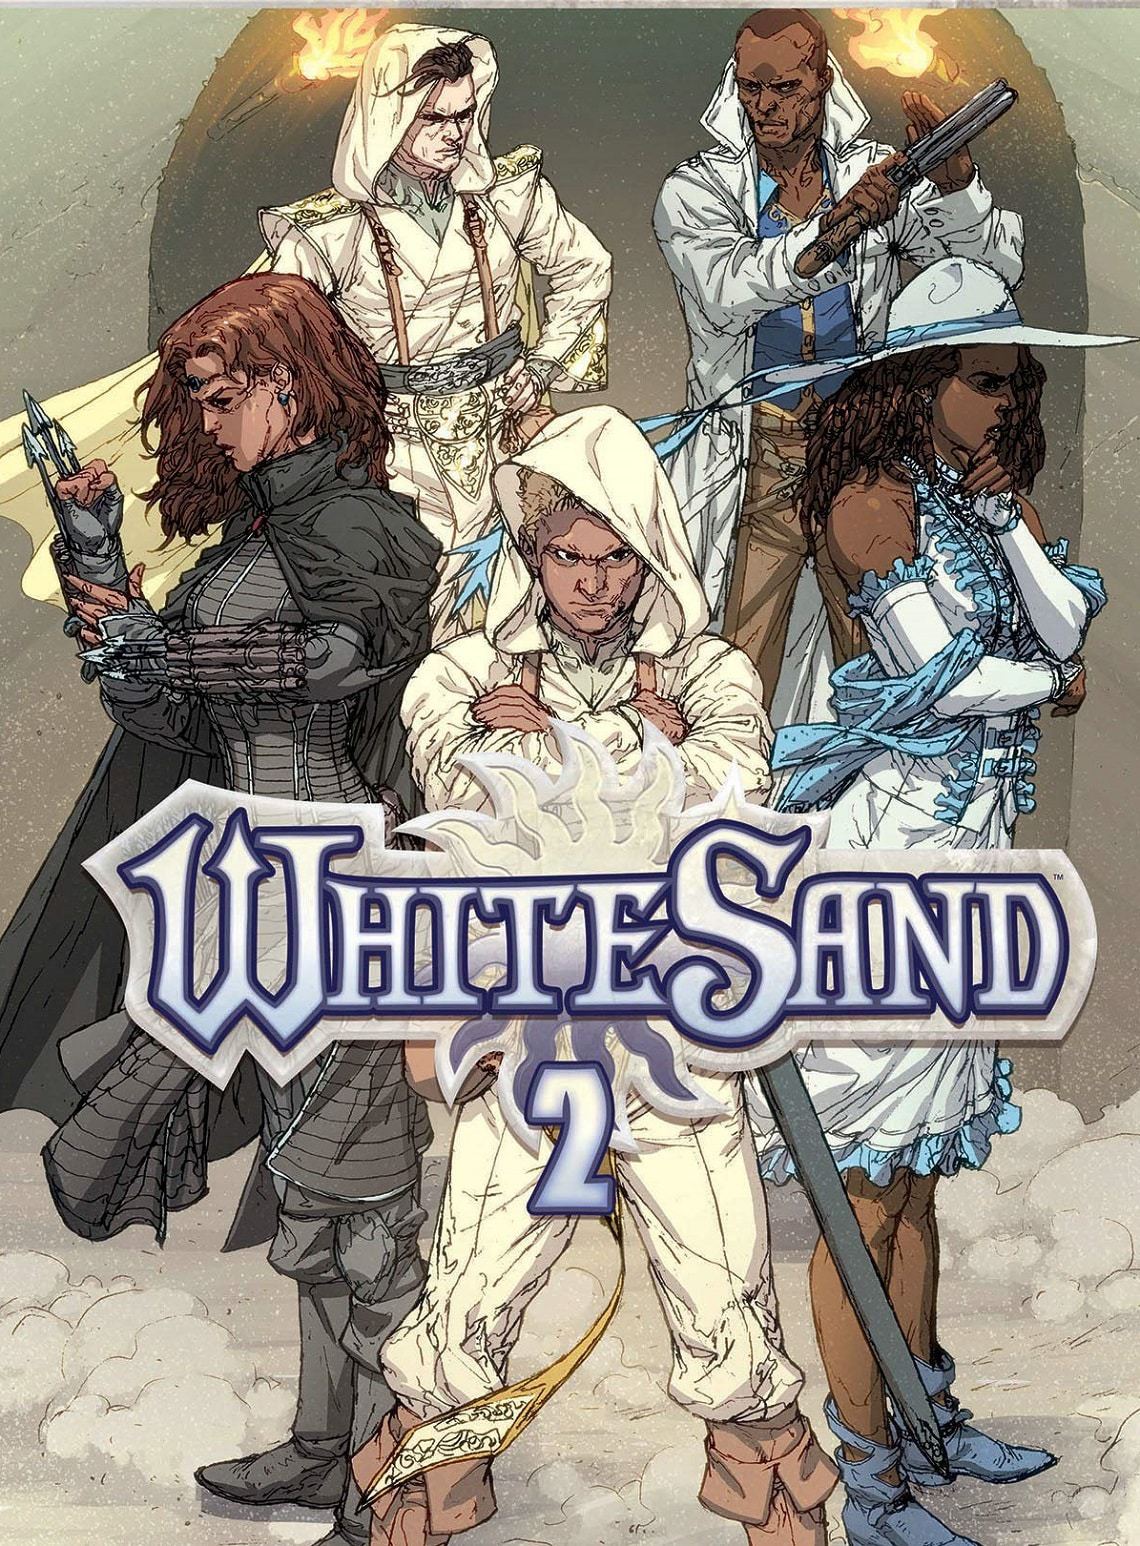 White Sand Volume 2 Audiobook Free